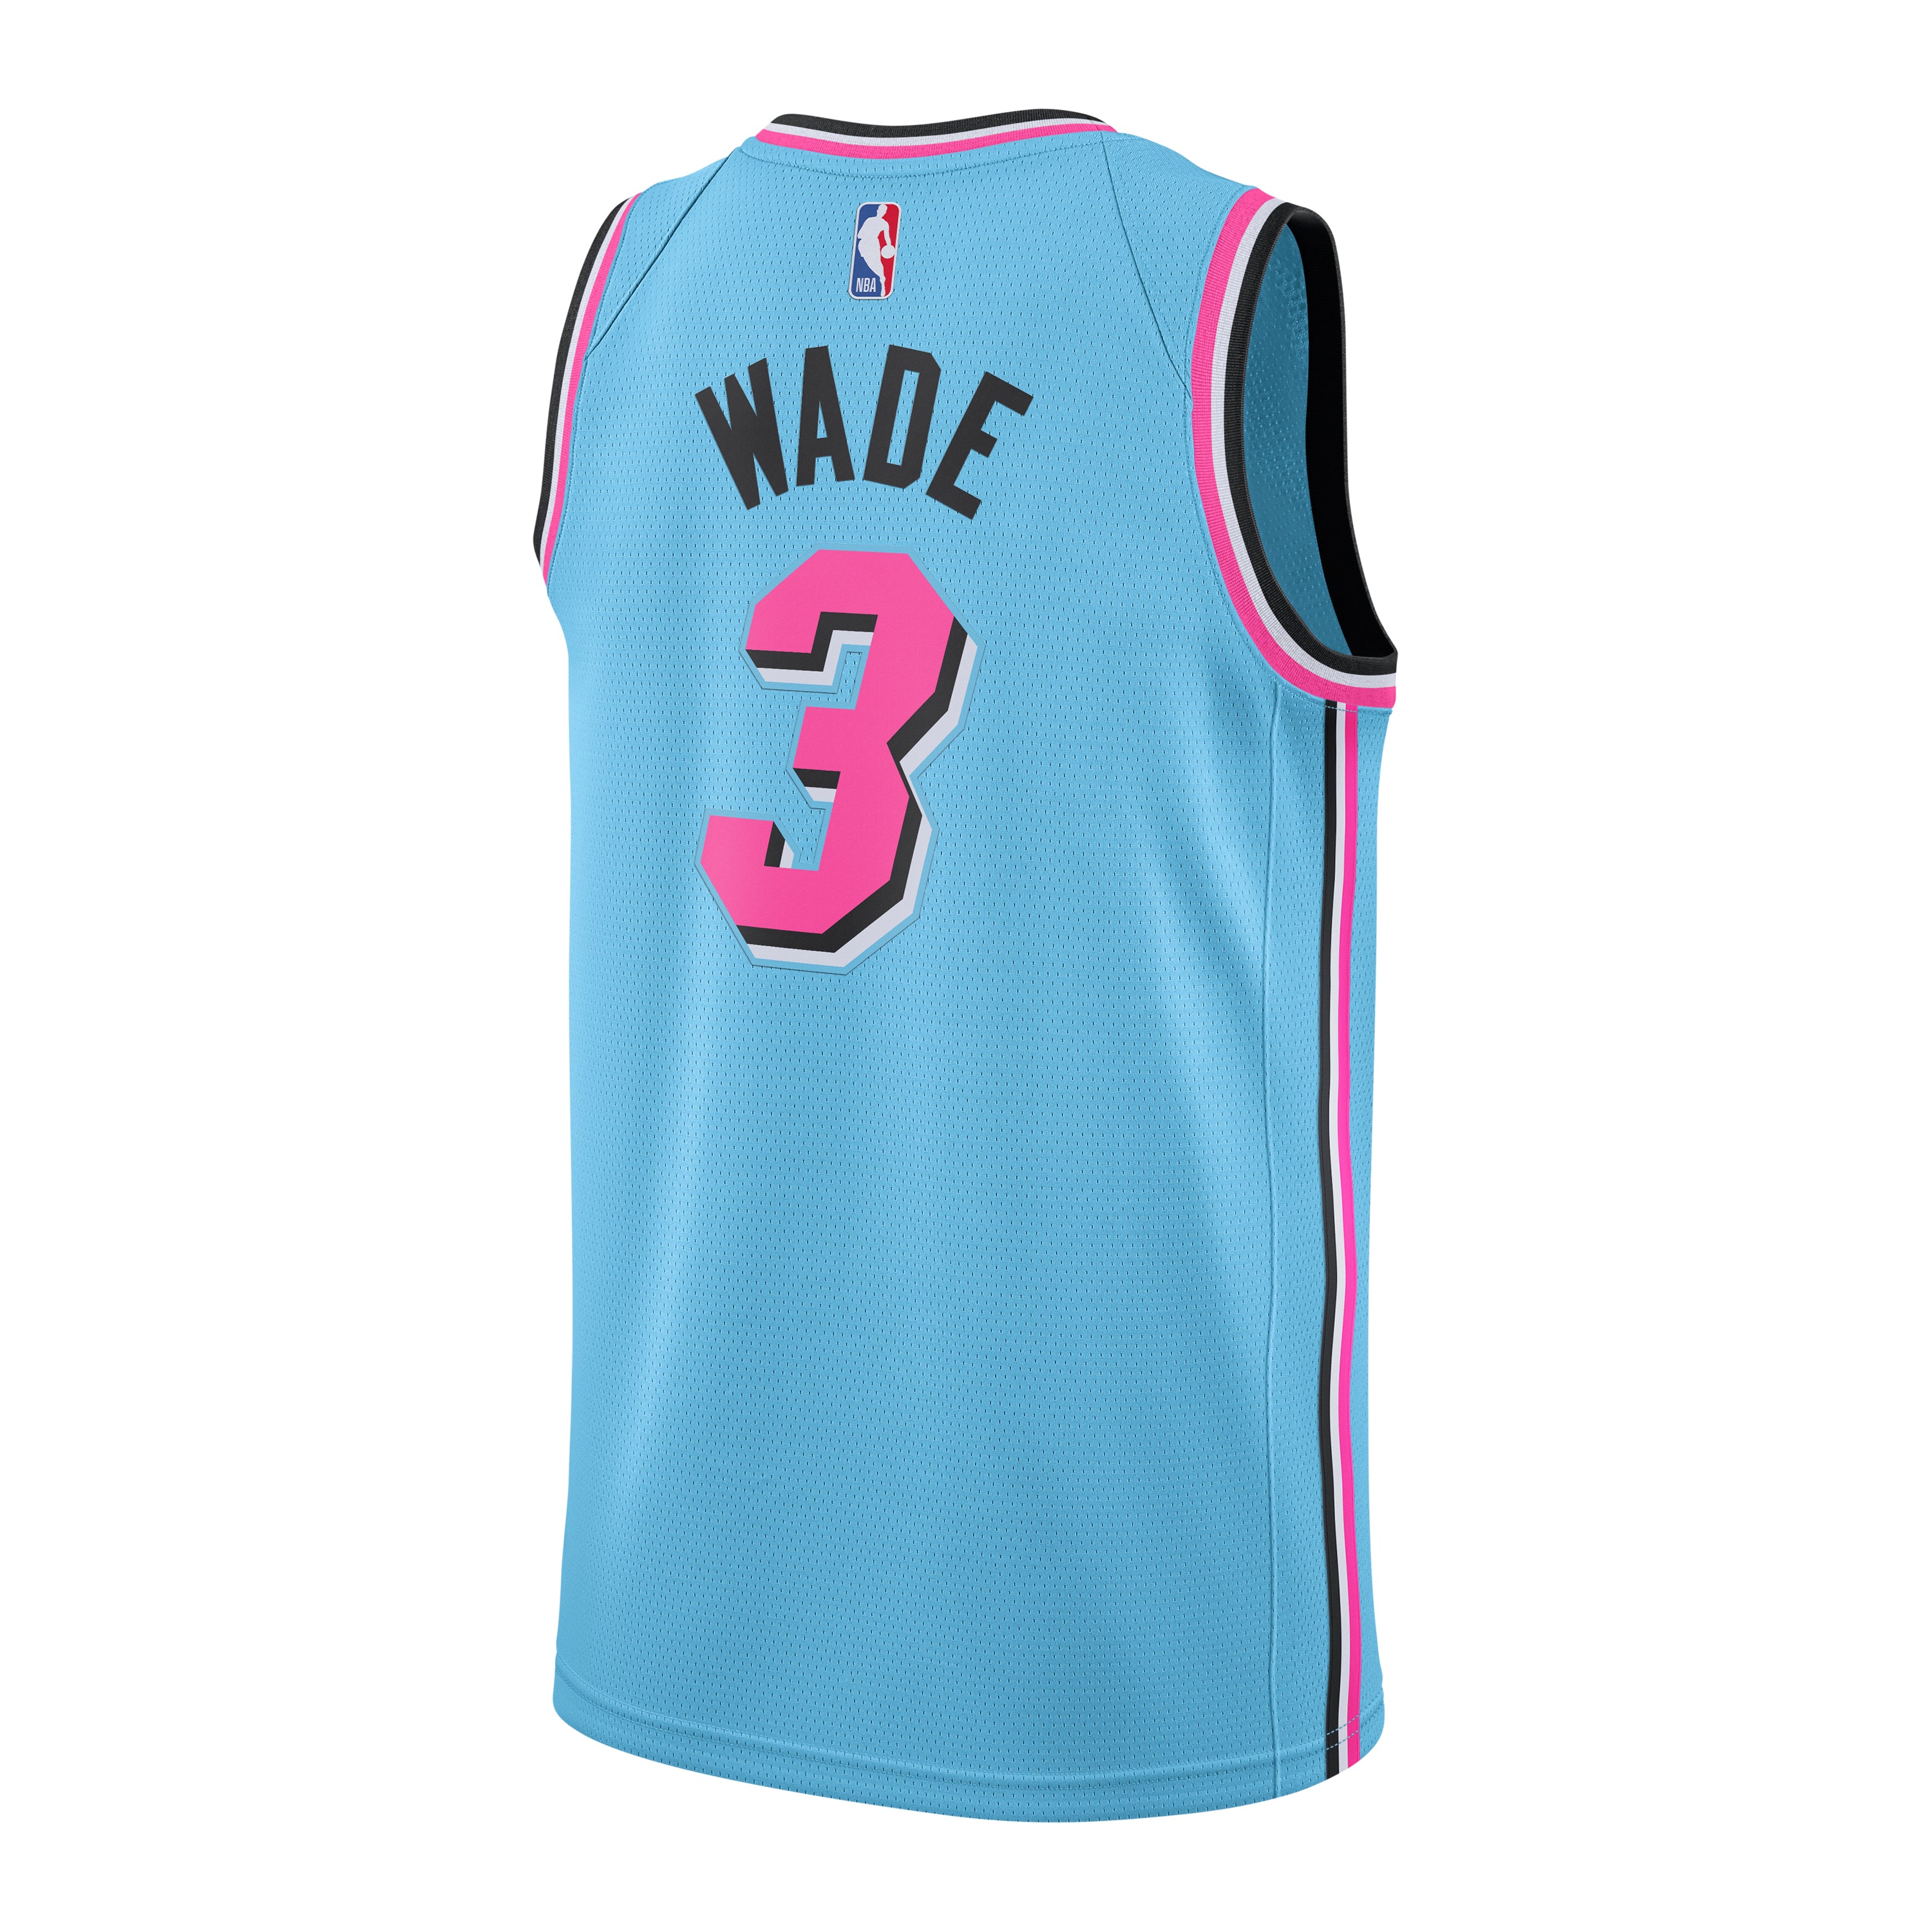 Dwyane Wade Miami Heat Vice Nights Blue Pink Swingman Jersey